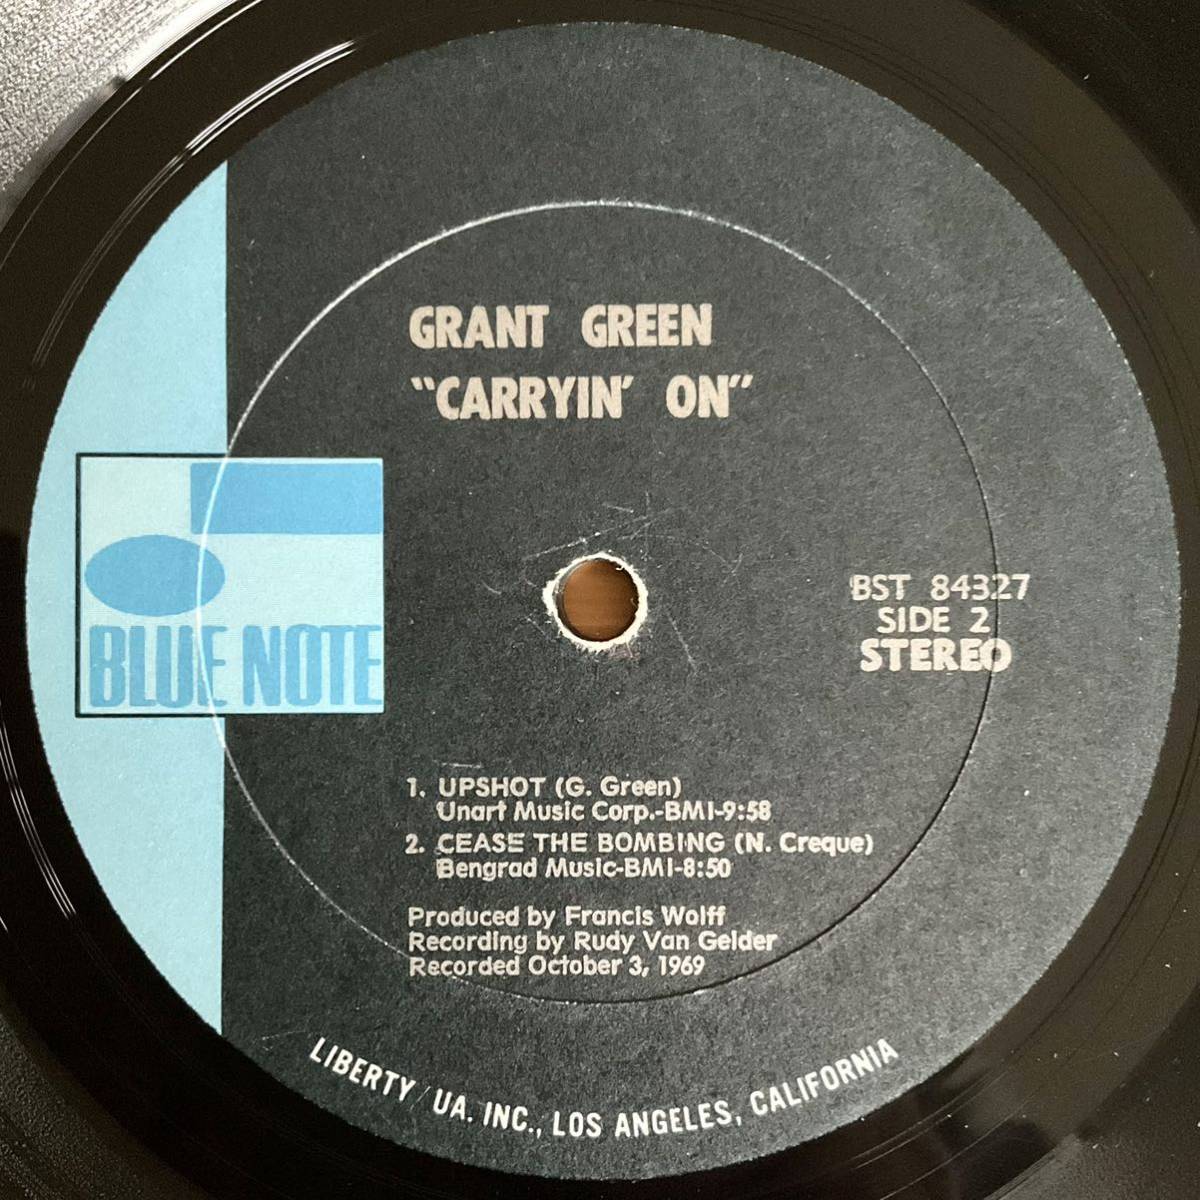 GRANT GREEN “CARRYIN’ ON” /BLUE NOTE 青黒LIBERTY / BST 84327 VAN GELDER刻印あり_画像5